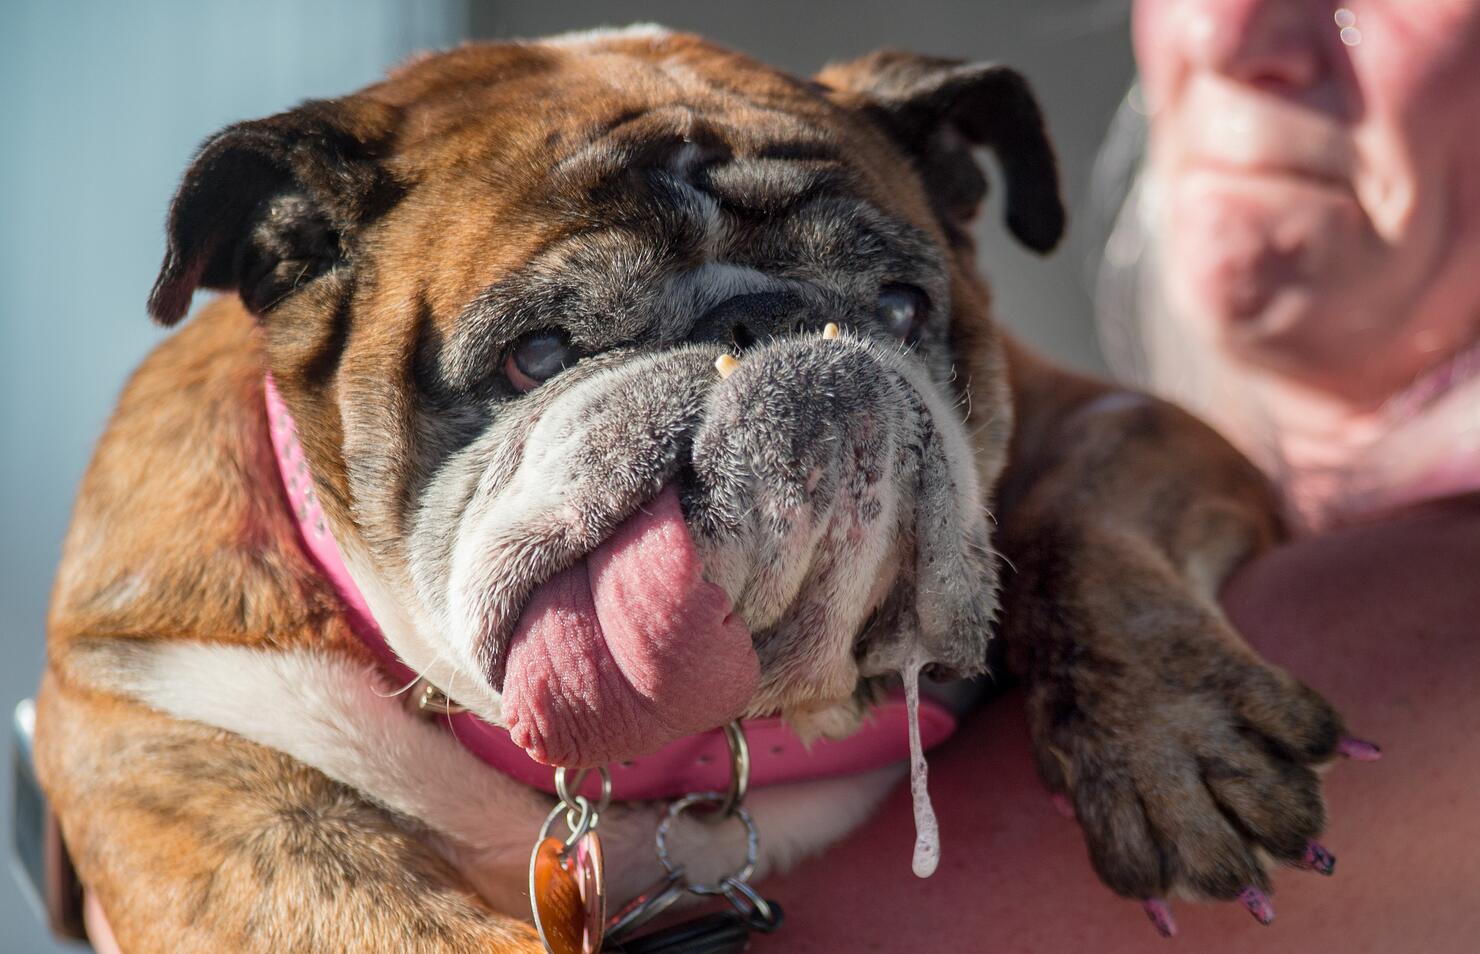 world's ugliest dog competition winner